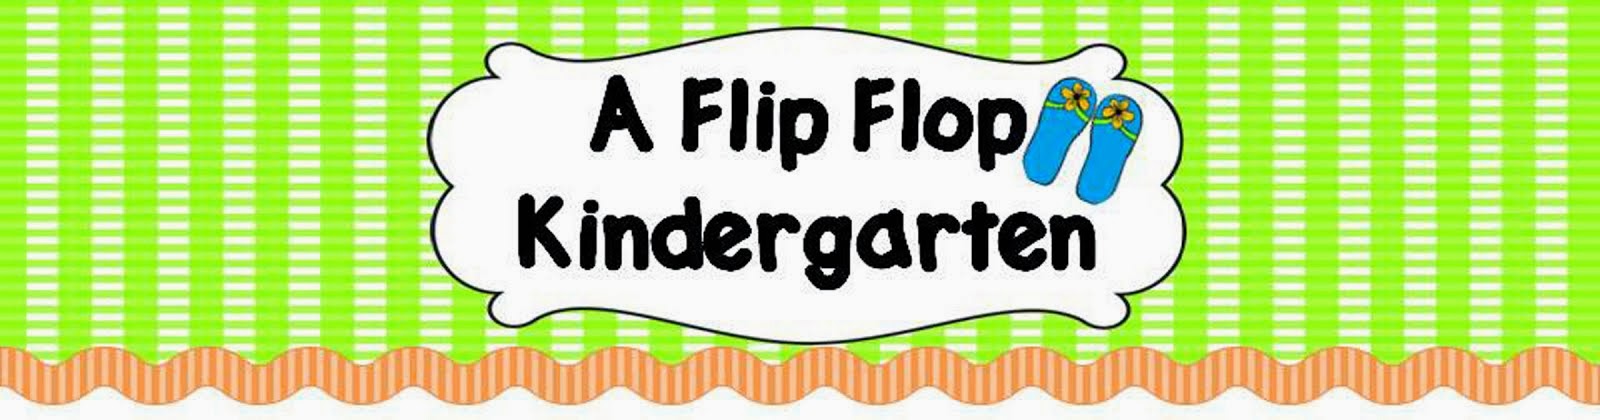 A Flip Flop Kindergarten